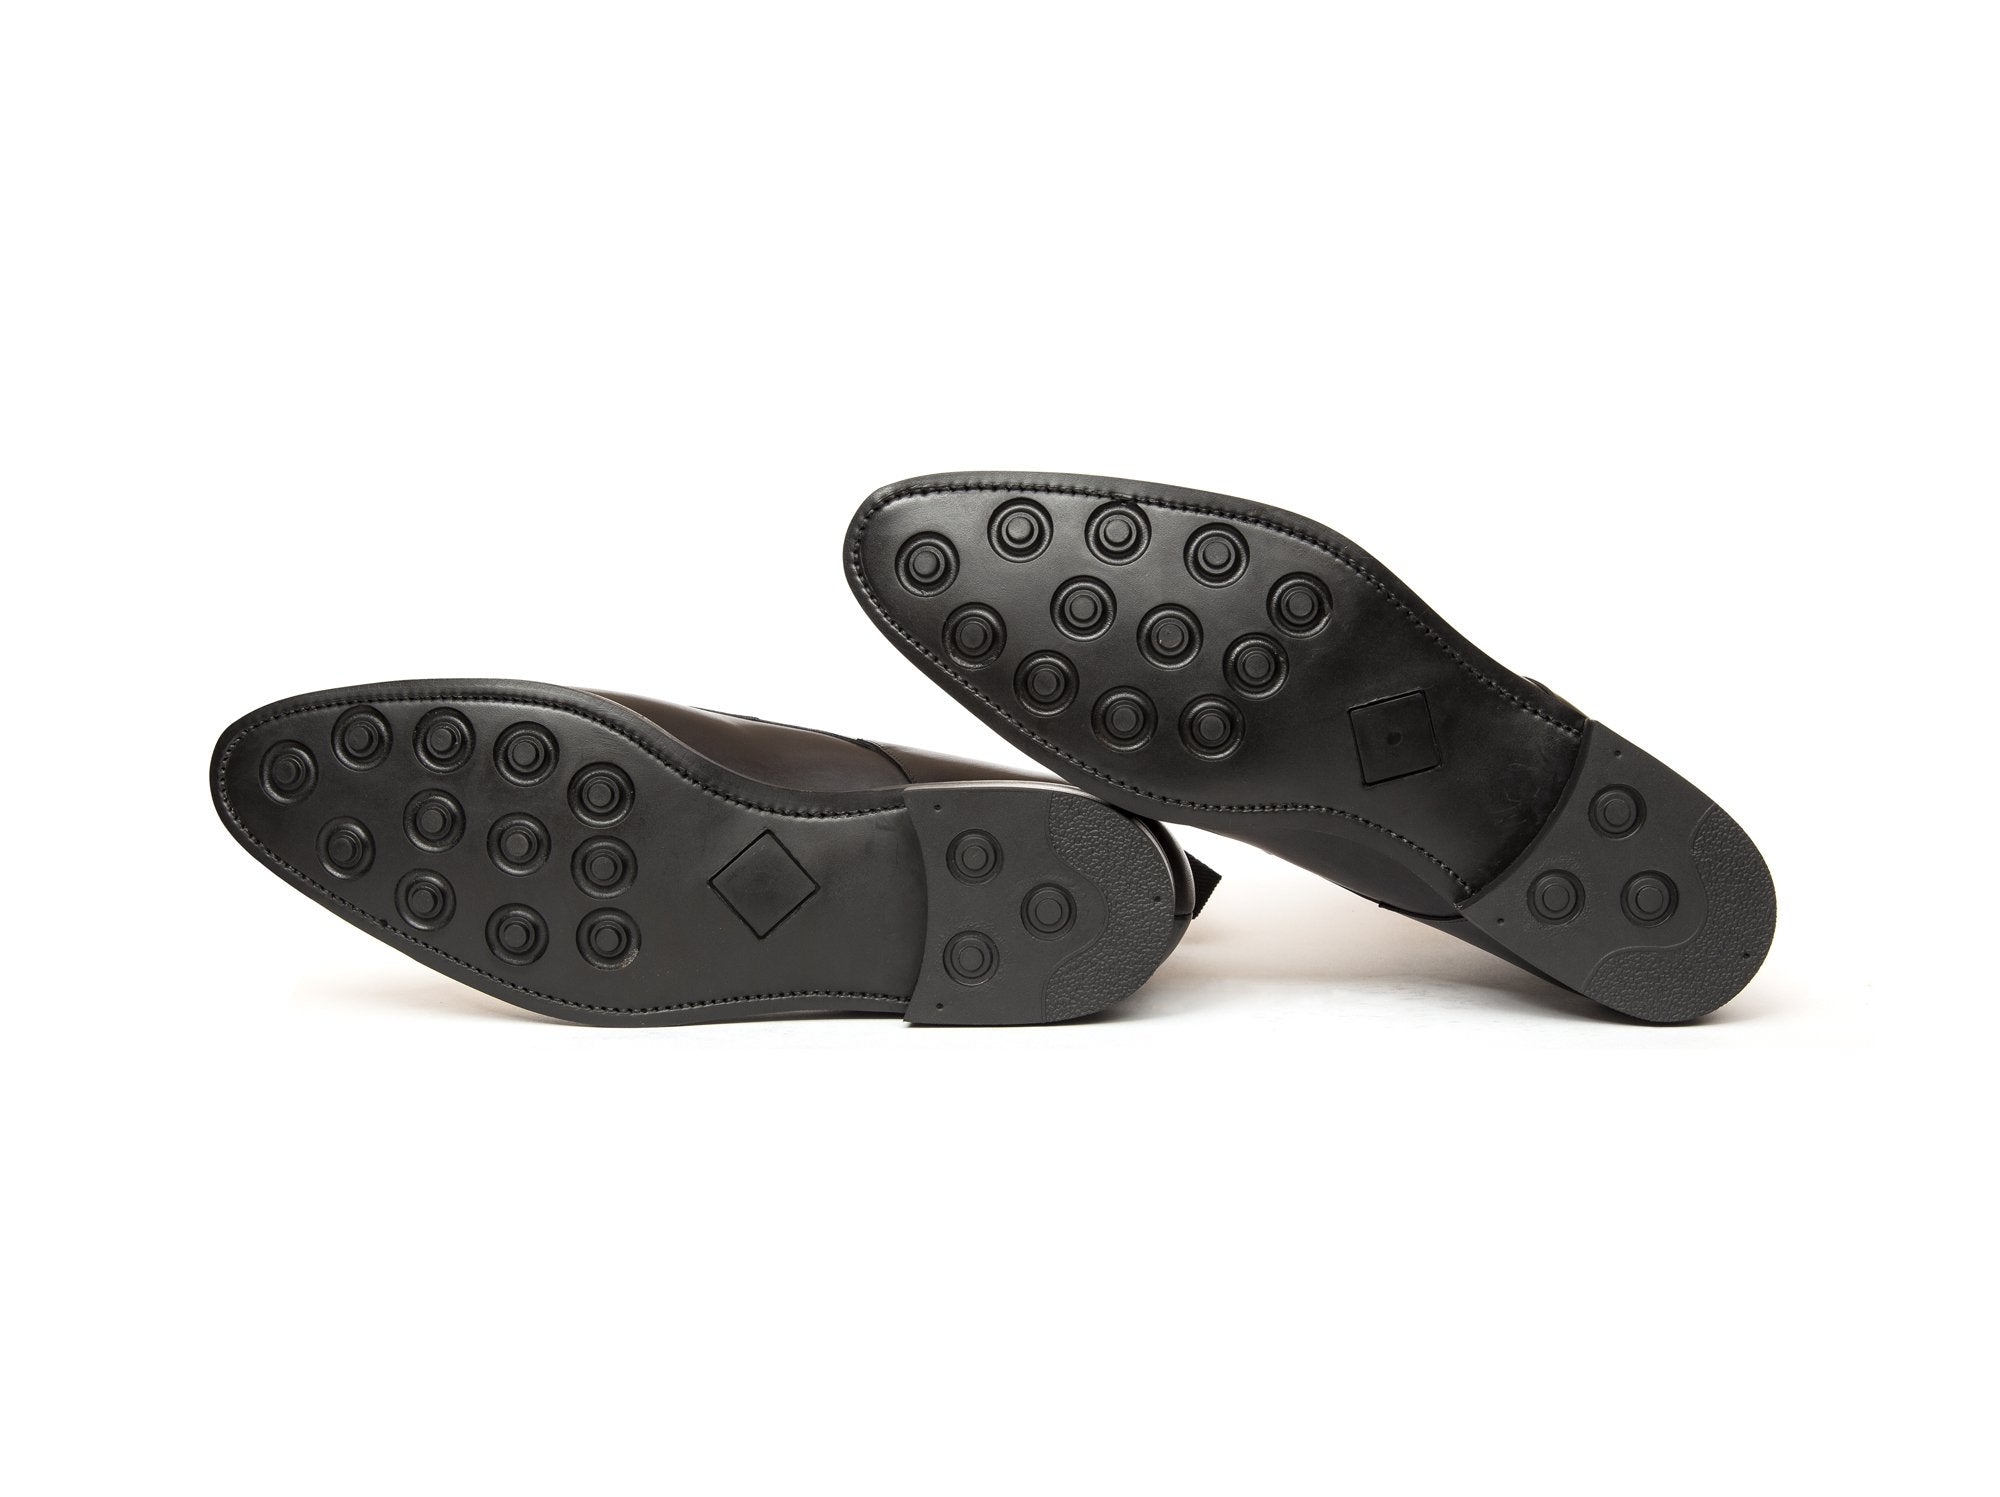 J.FitzPatrick Footwear - Delridge - Shaded Black Calf / Grey Museum - TMG Last - Country Rubber Sole